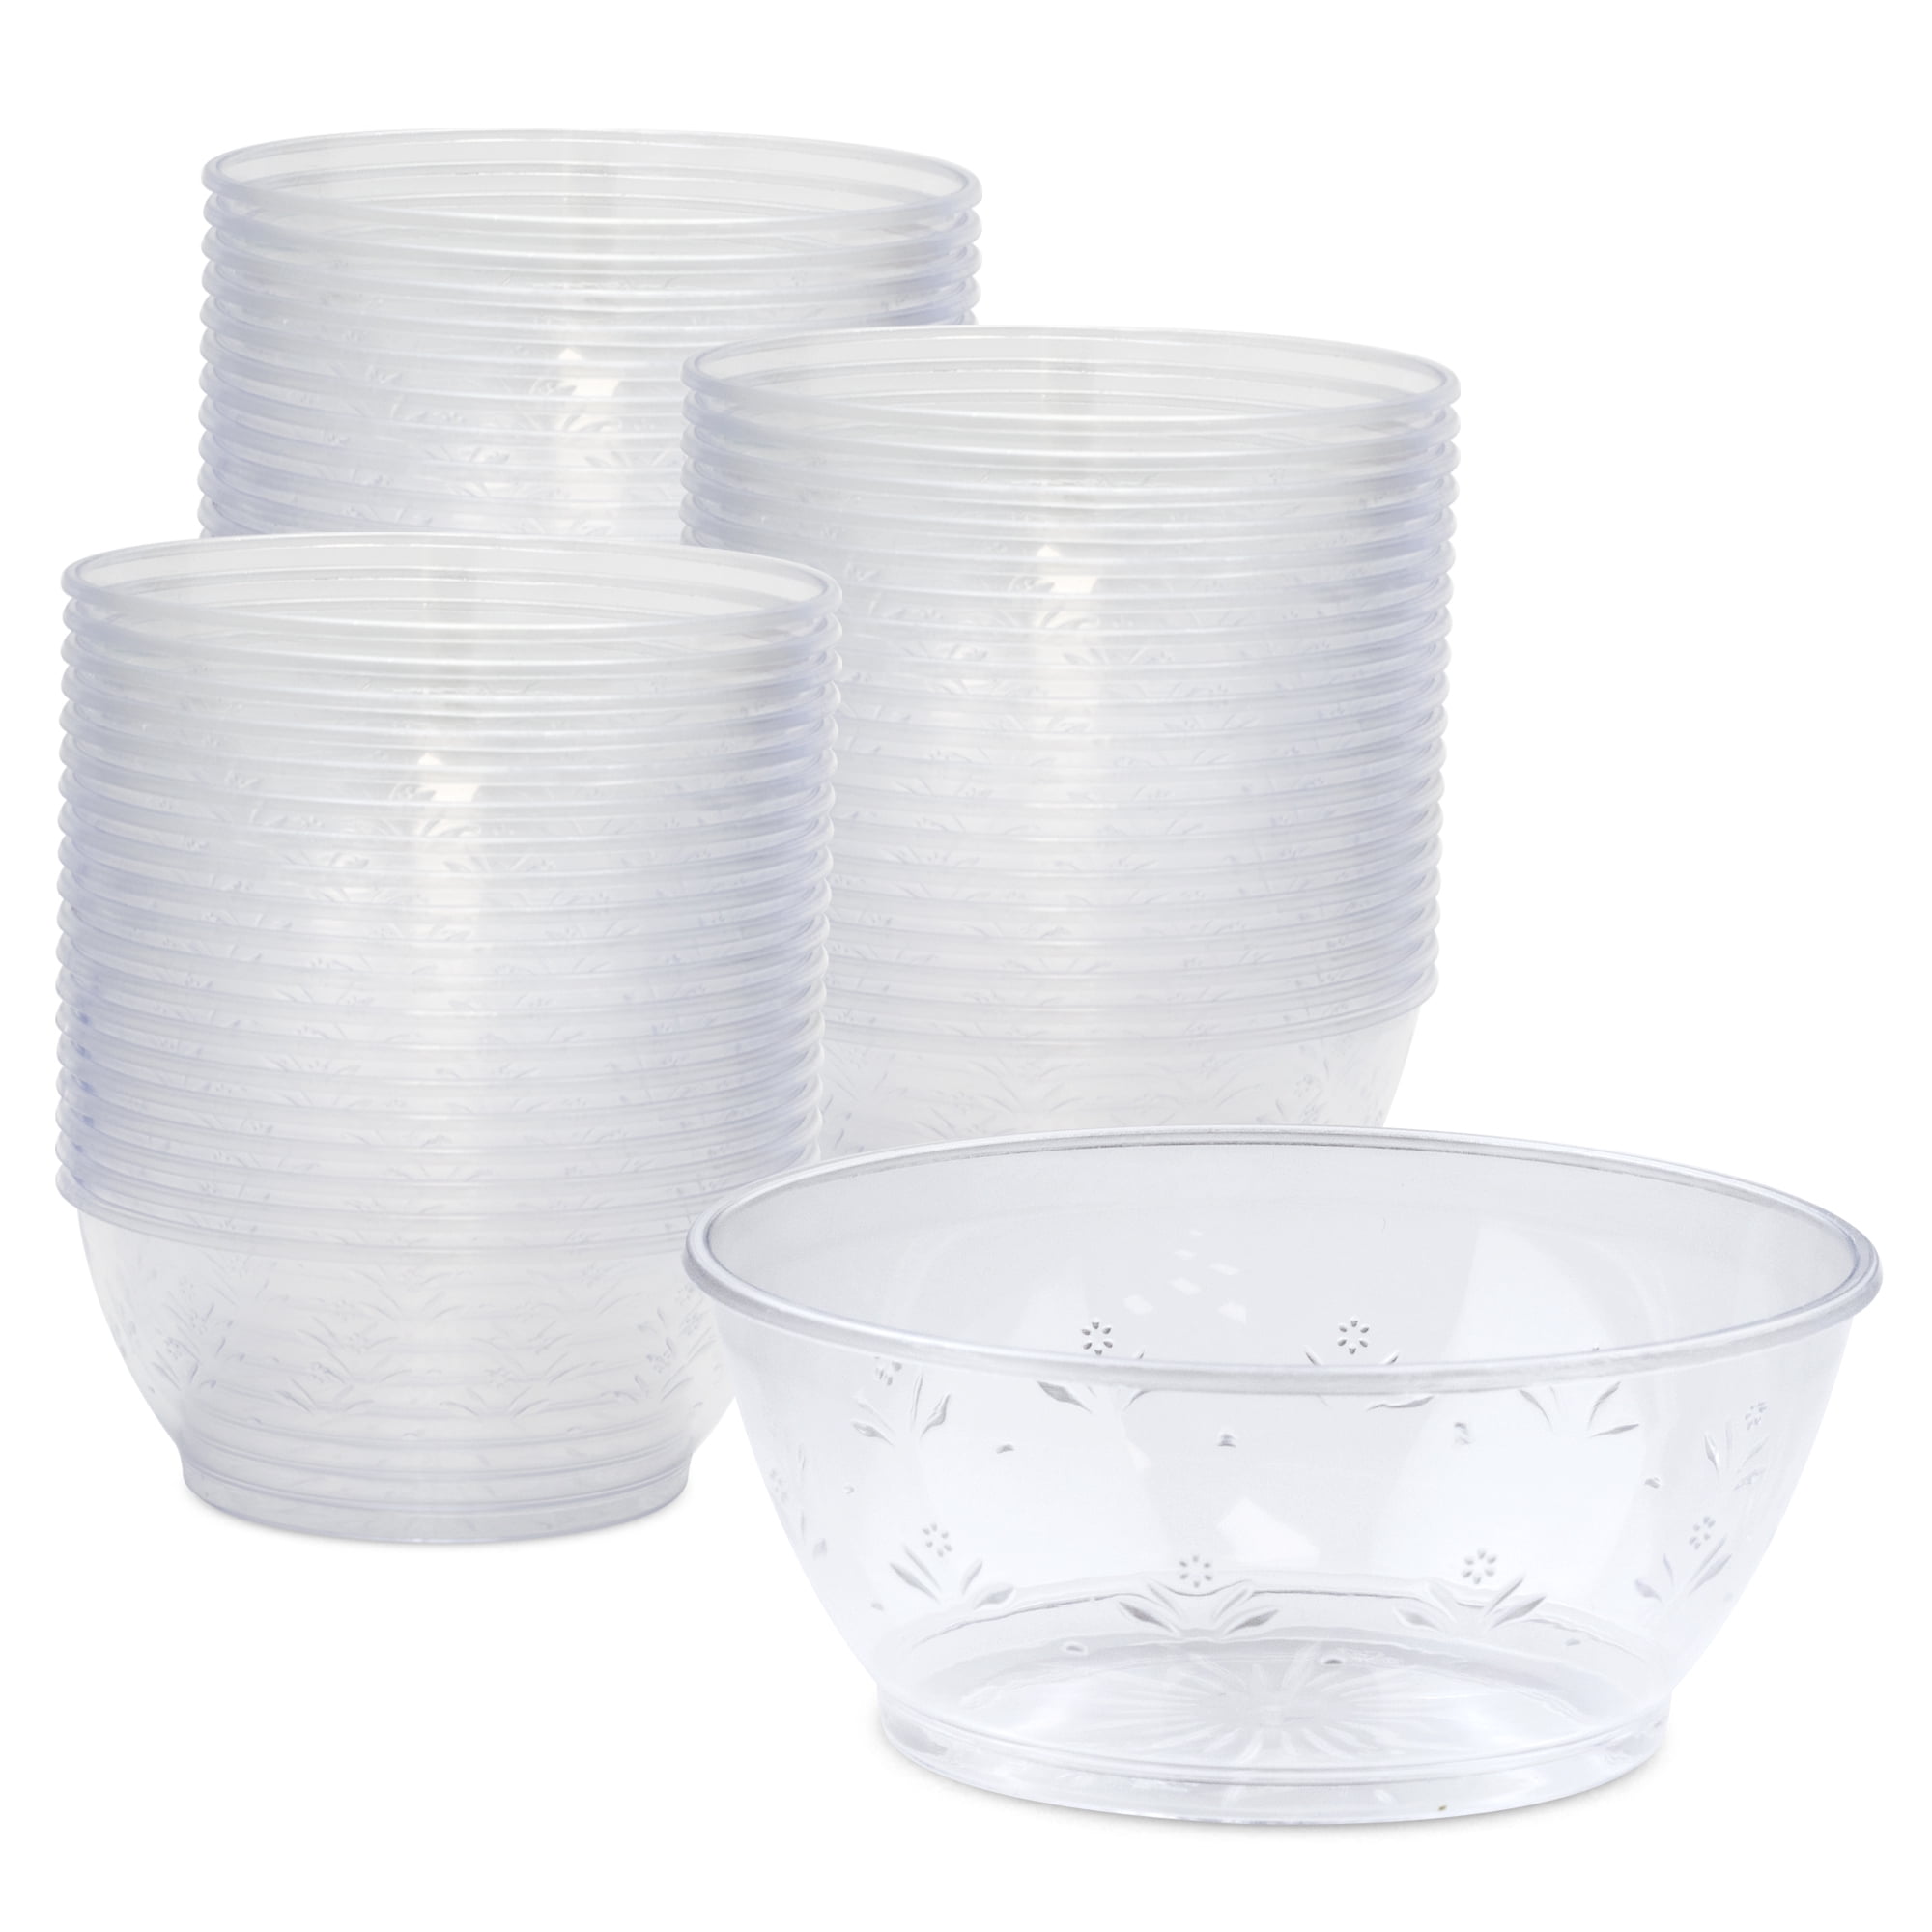 [120 Pack] Clear Plastic Bowls 6 oz Hard Plastic Ice